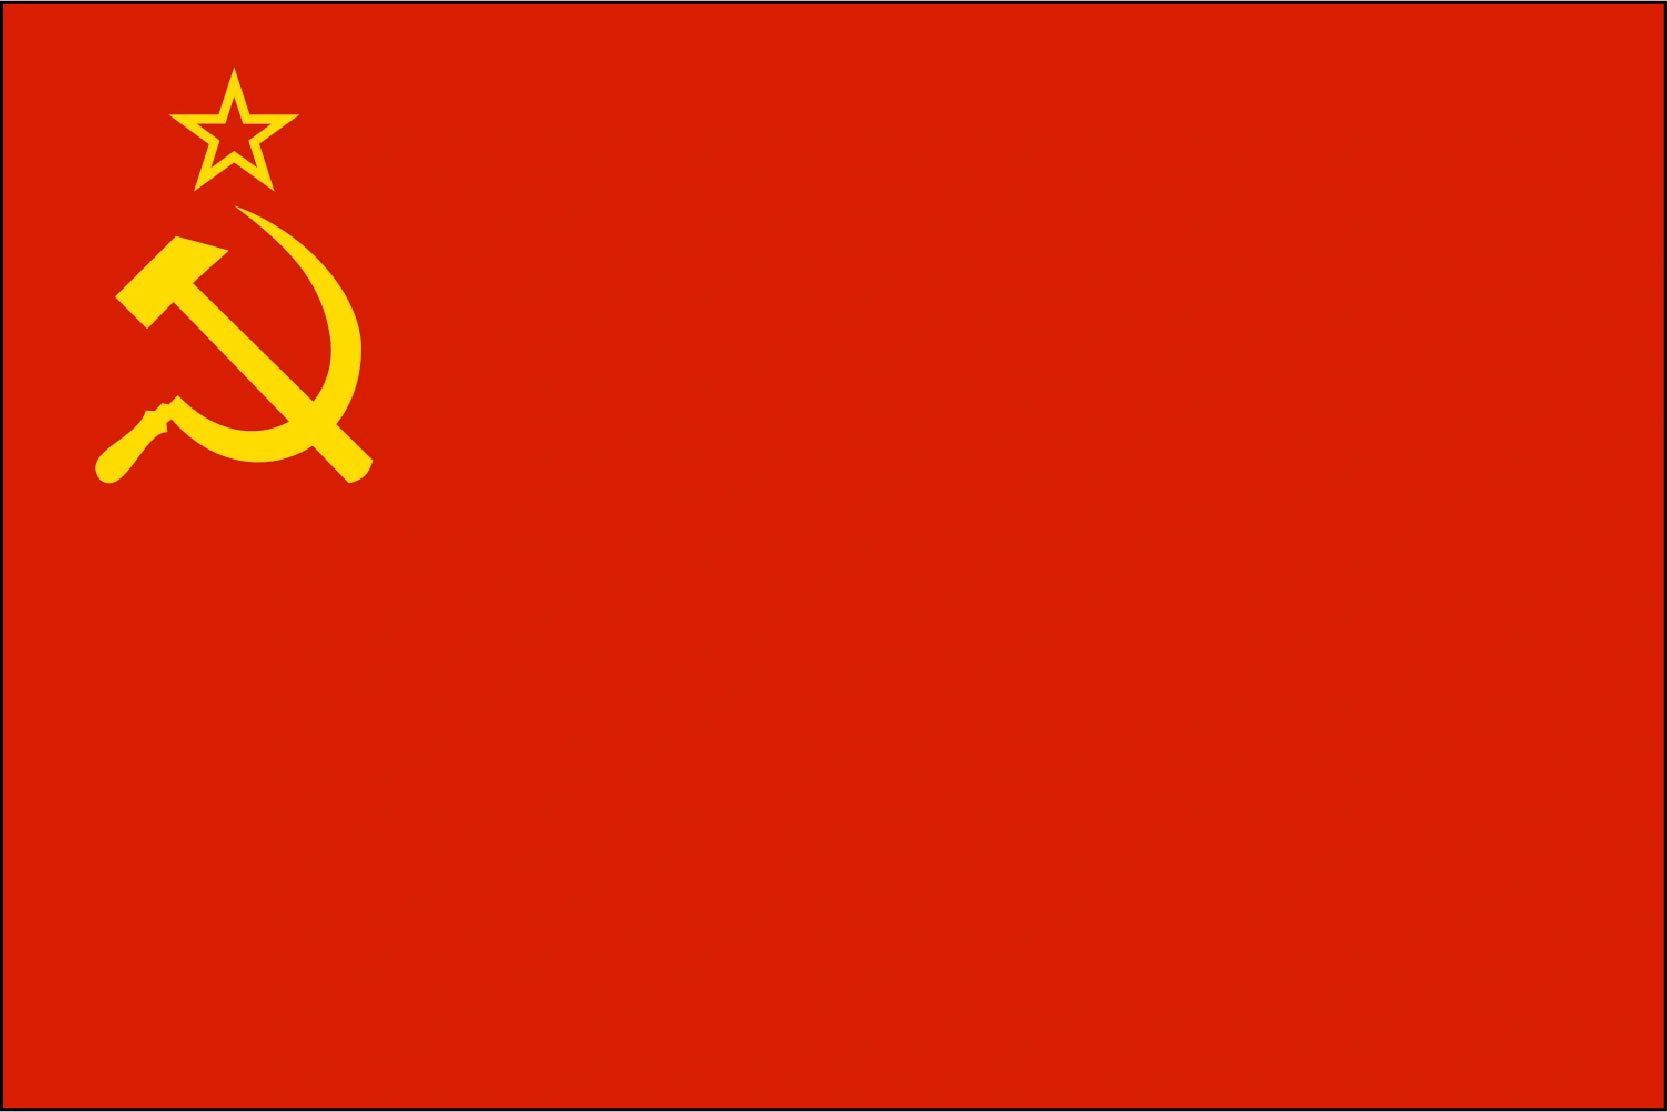 USSR (Old Soviet Union) flag - CALL FOR AVAILABILITY